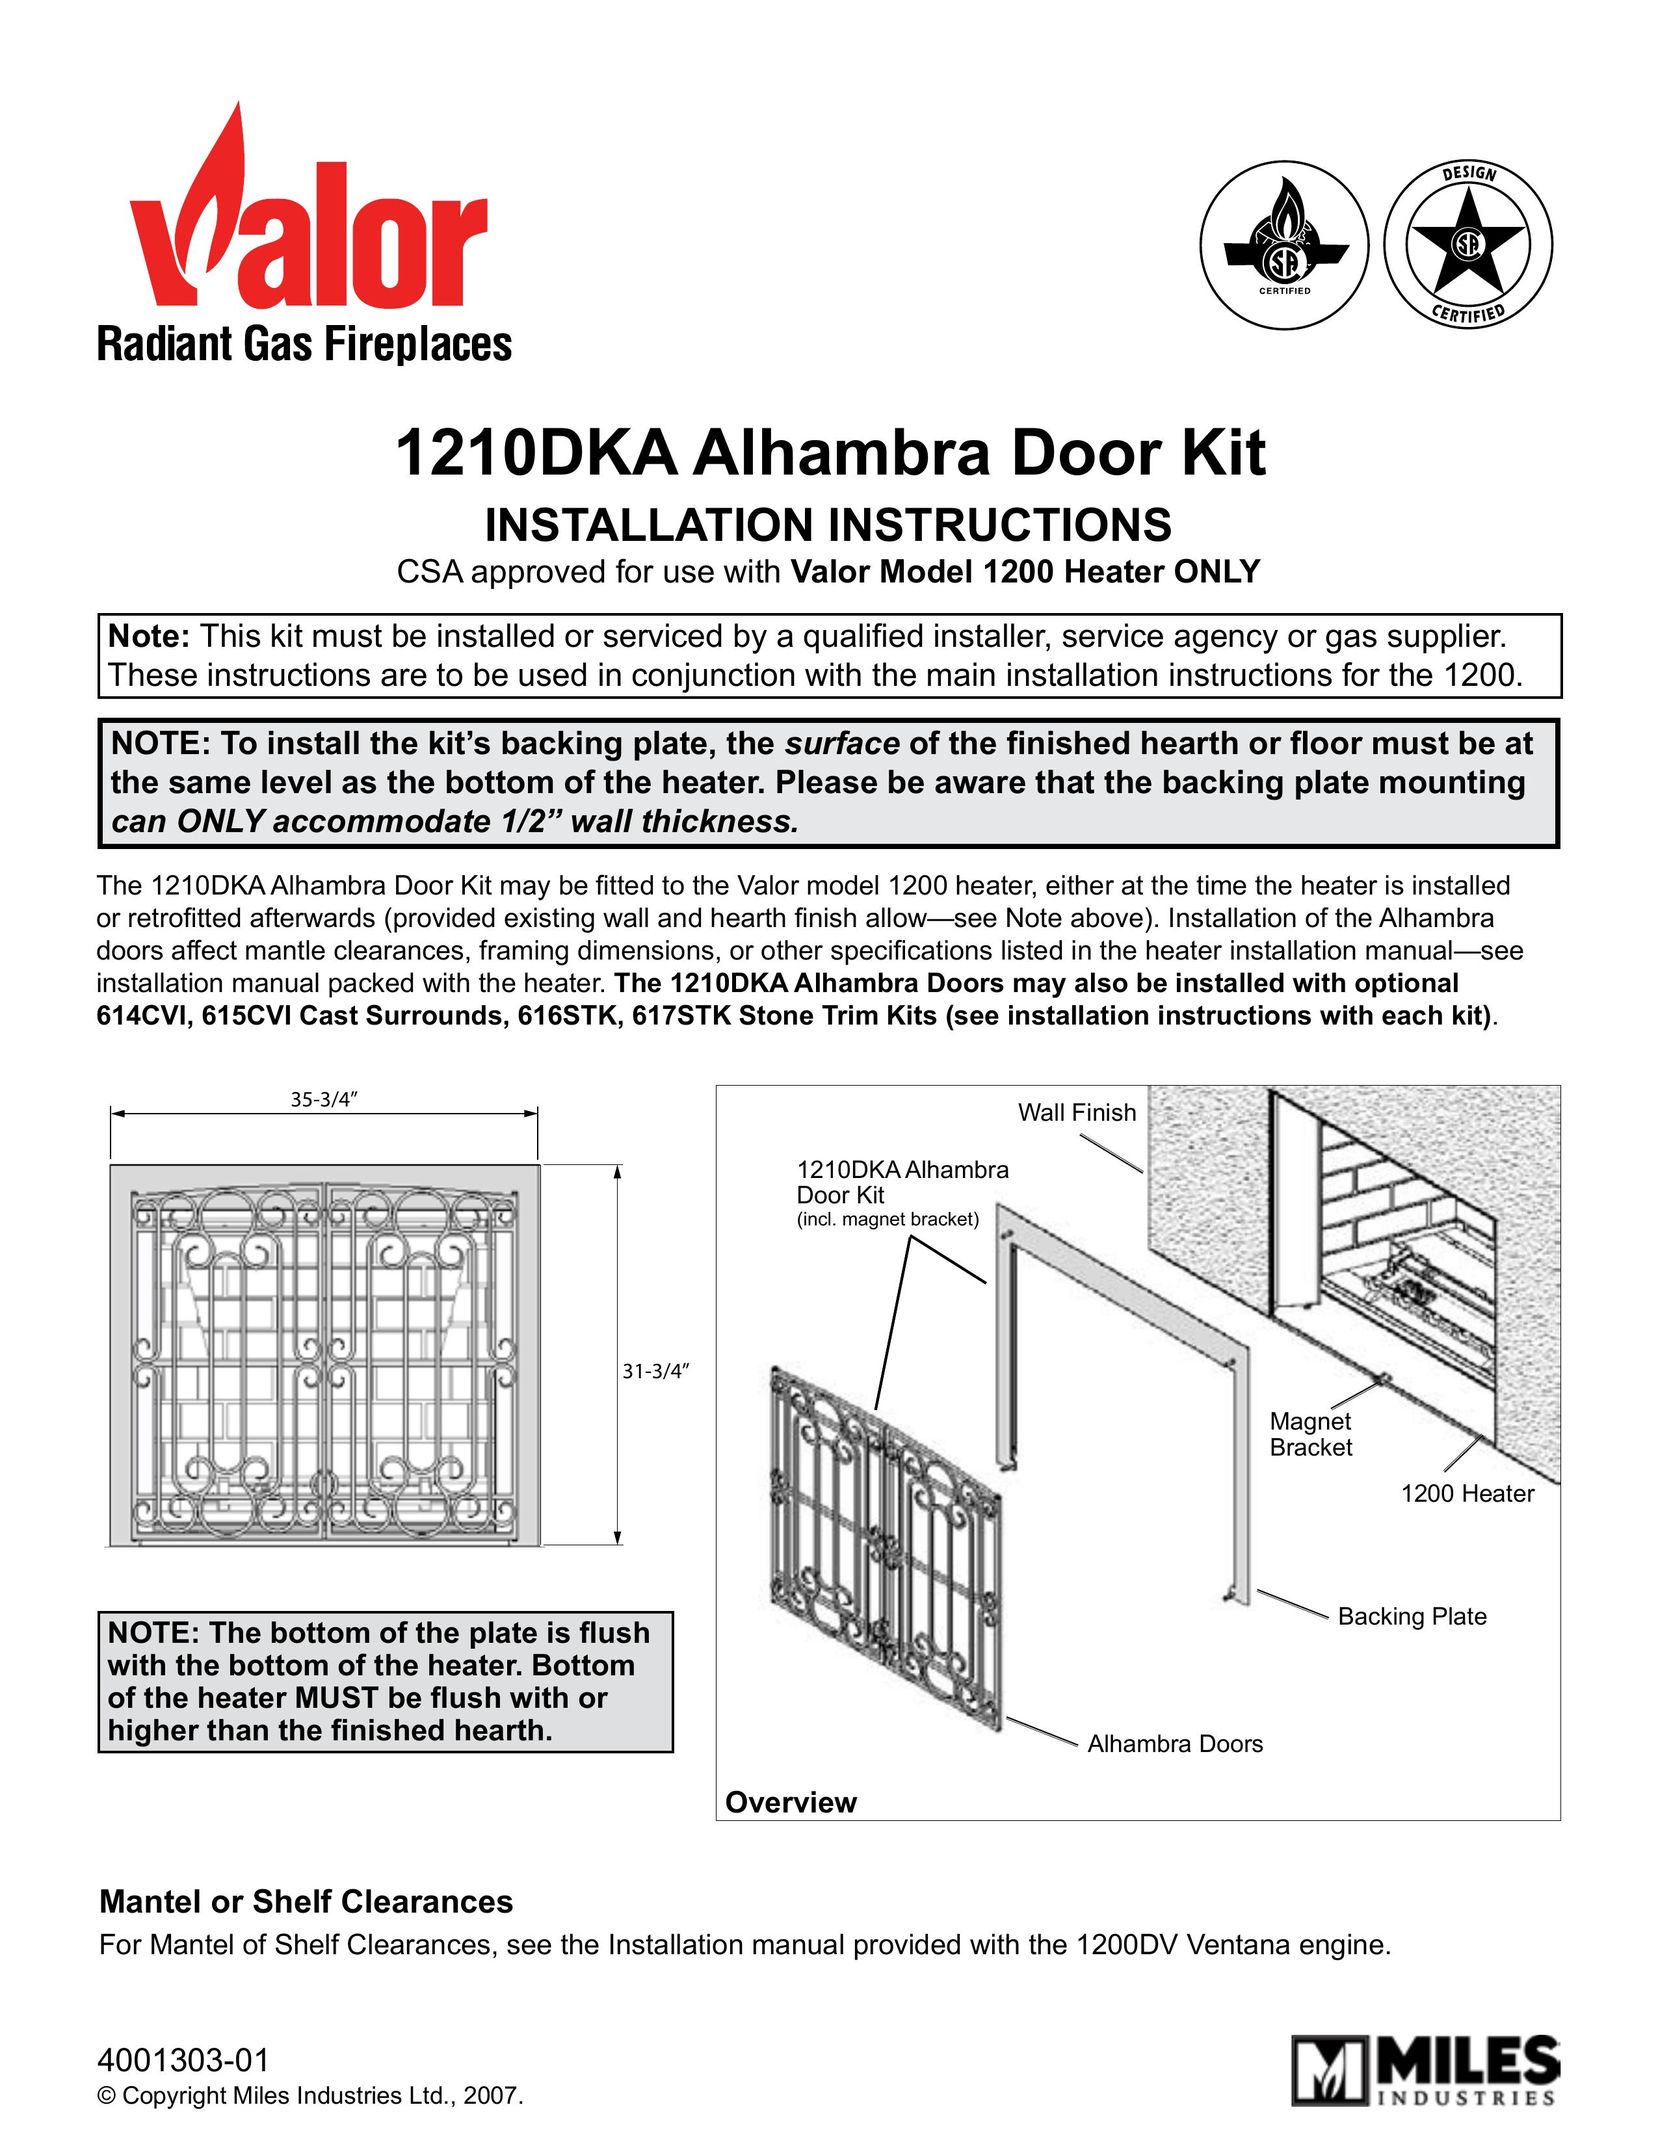 Valor Auto Companion Inc. 1210DKA Indoor Fireplace User Manual